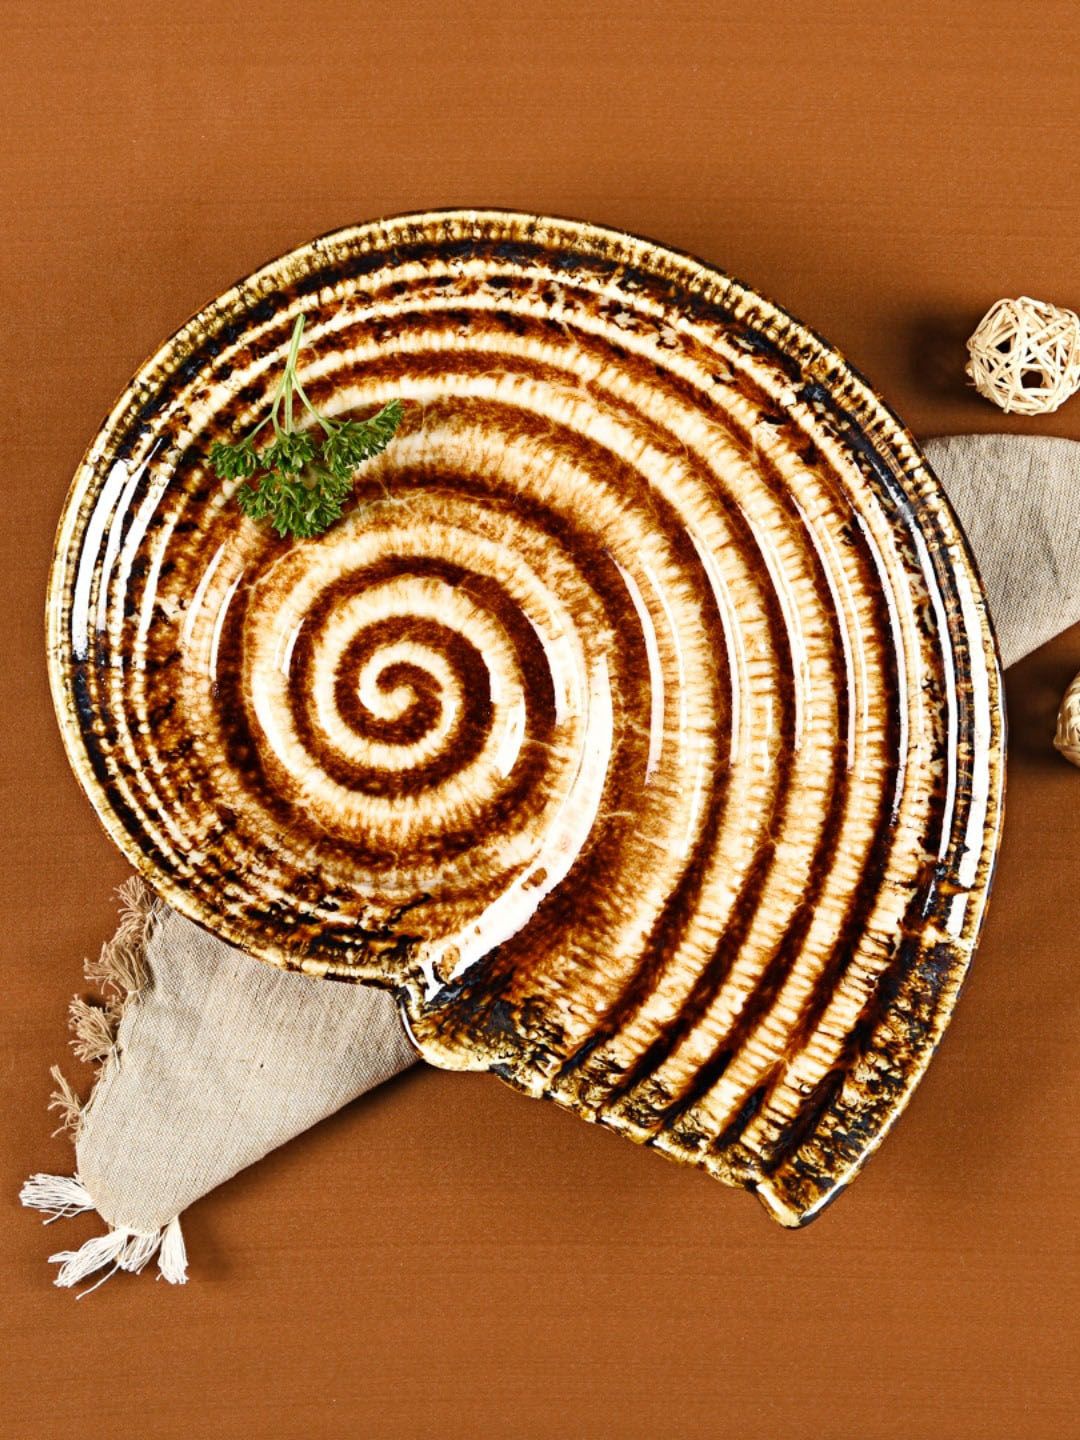 The 7 DeKor Brown Solid Snail Platter Serveware Price in India